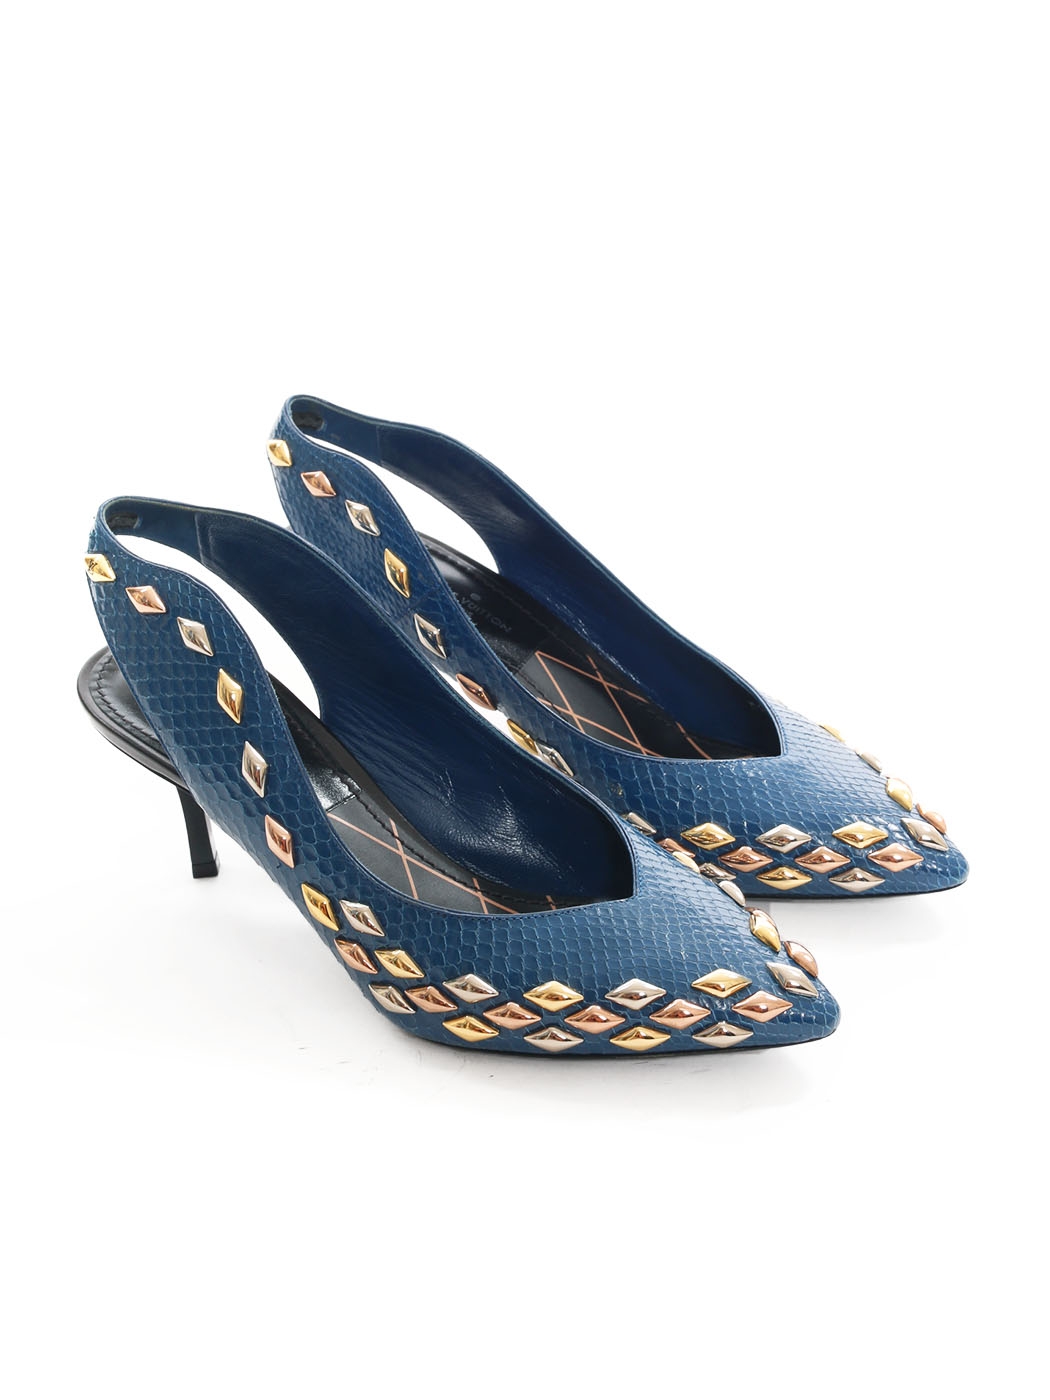 Louis Vuitton stiletto python heels